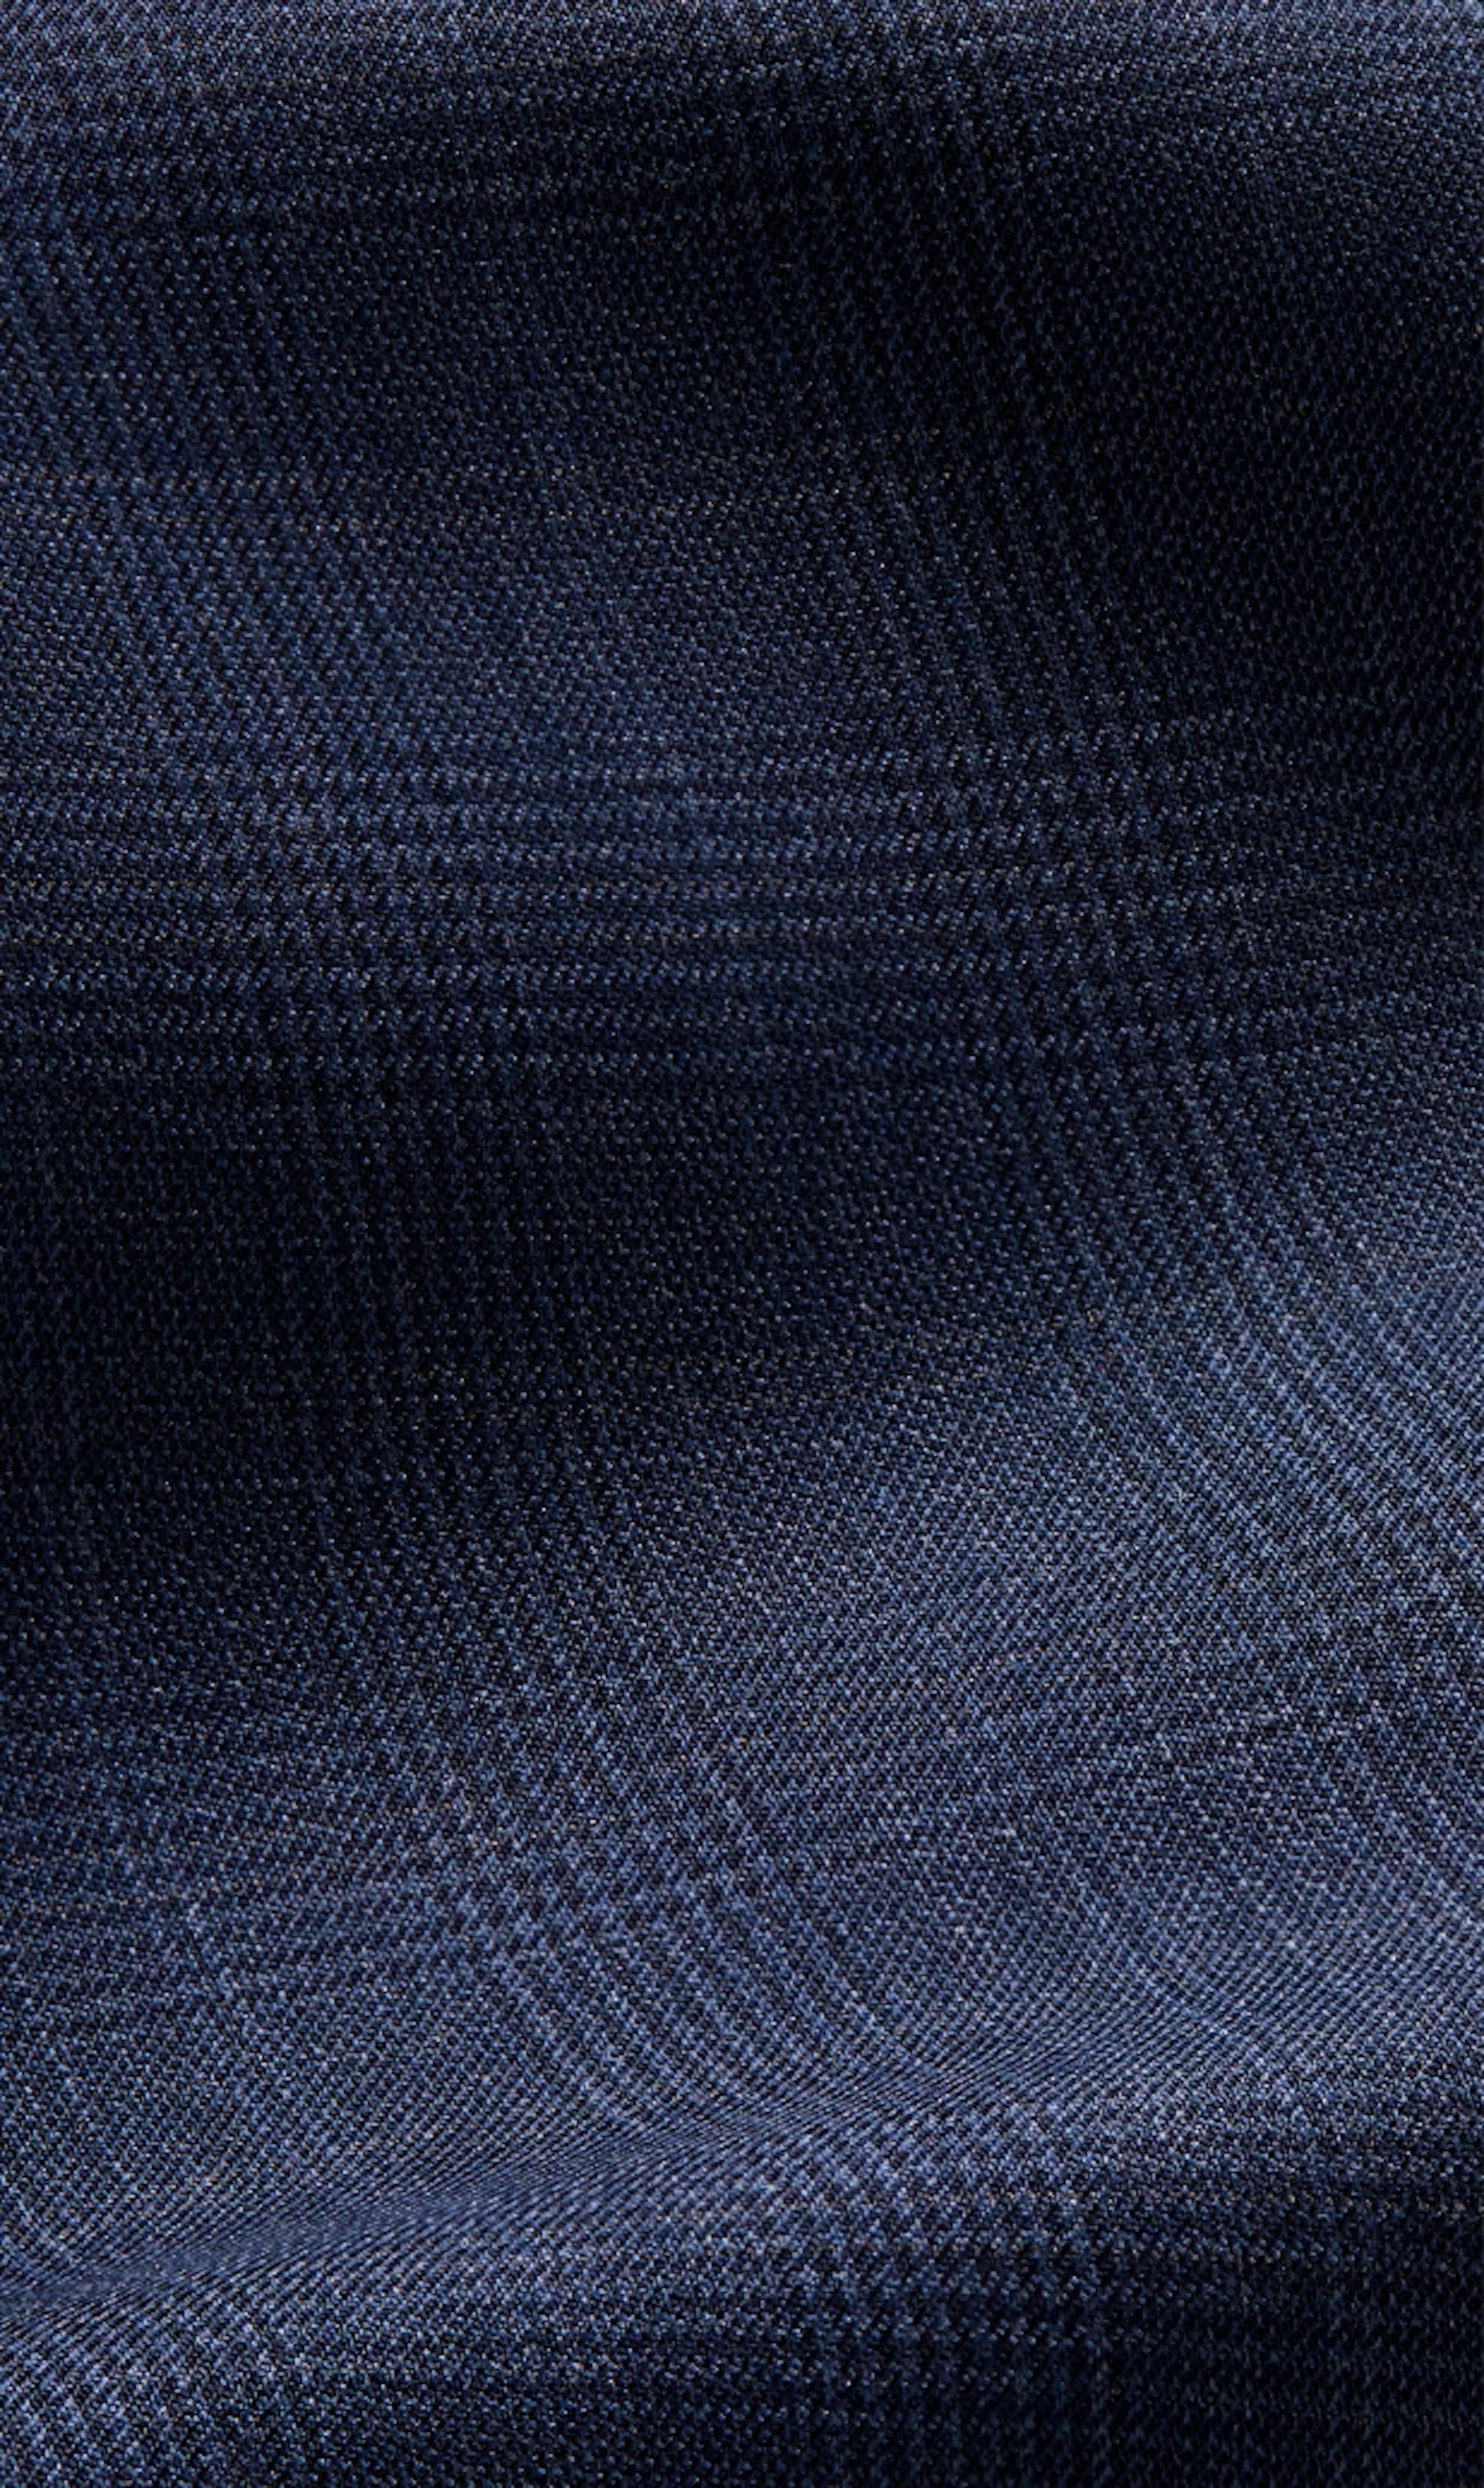 image of wool fabric